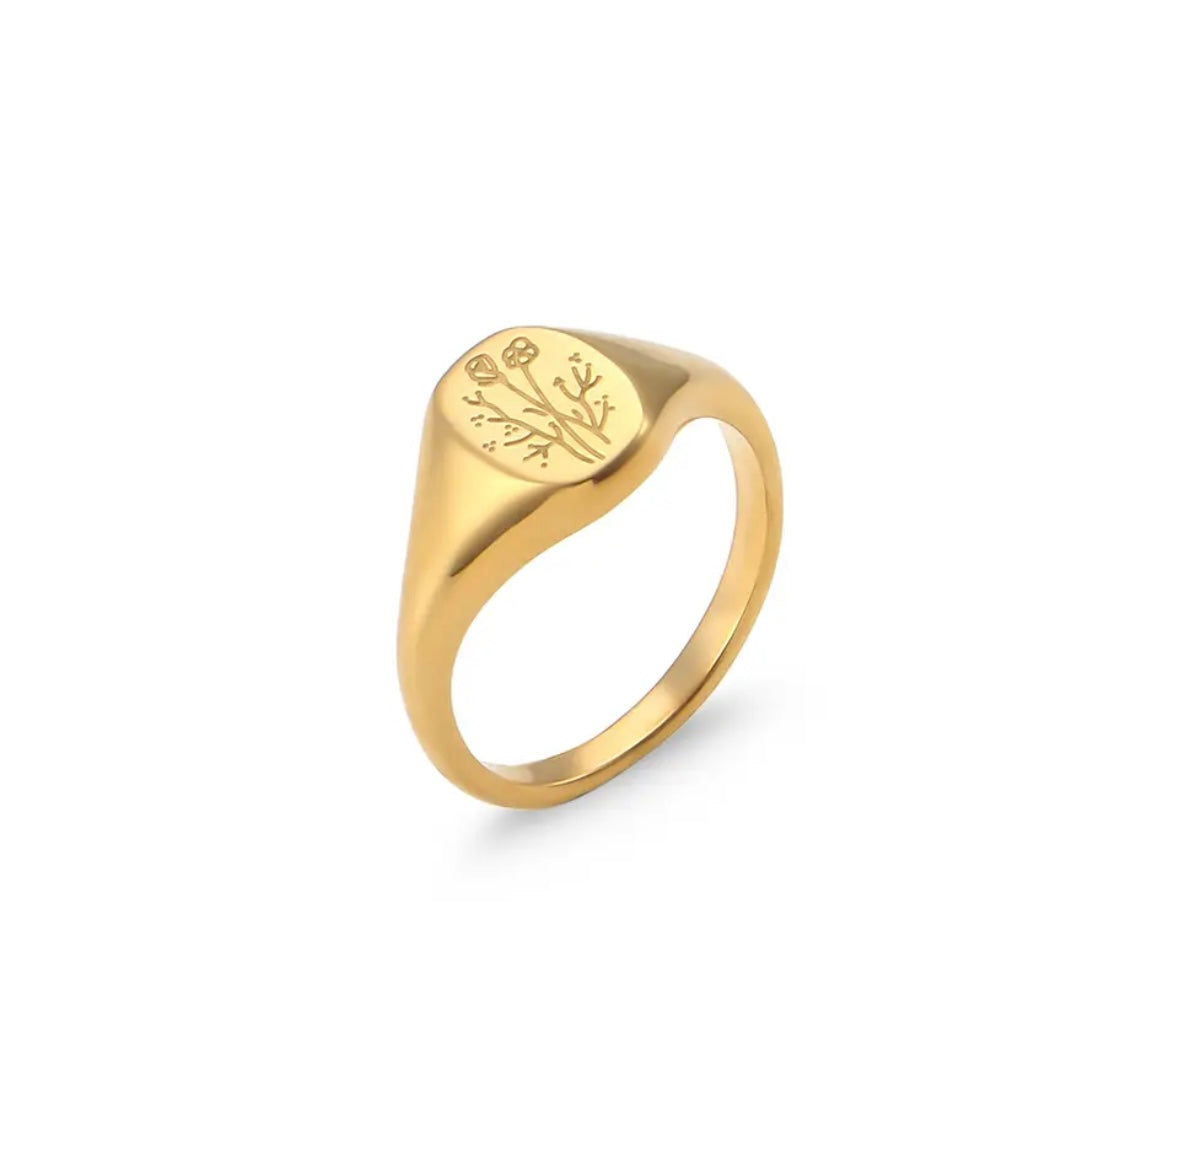 “Wildflower” engraved ring